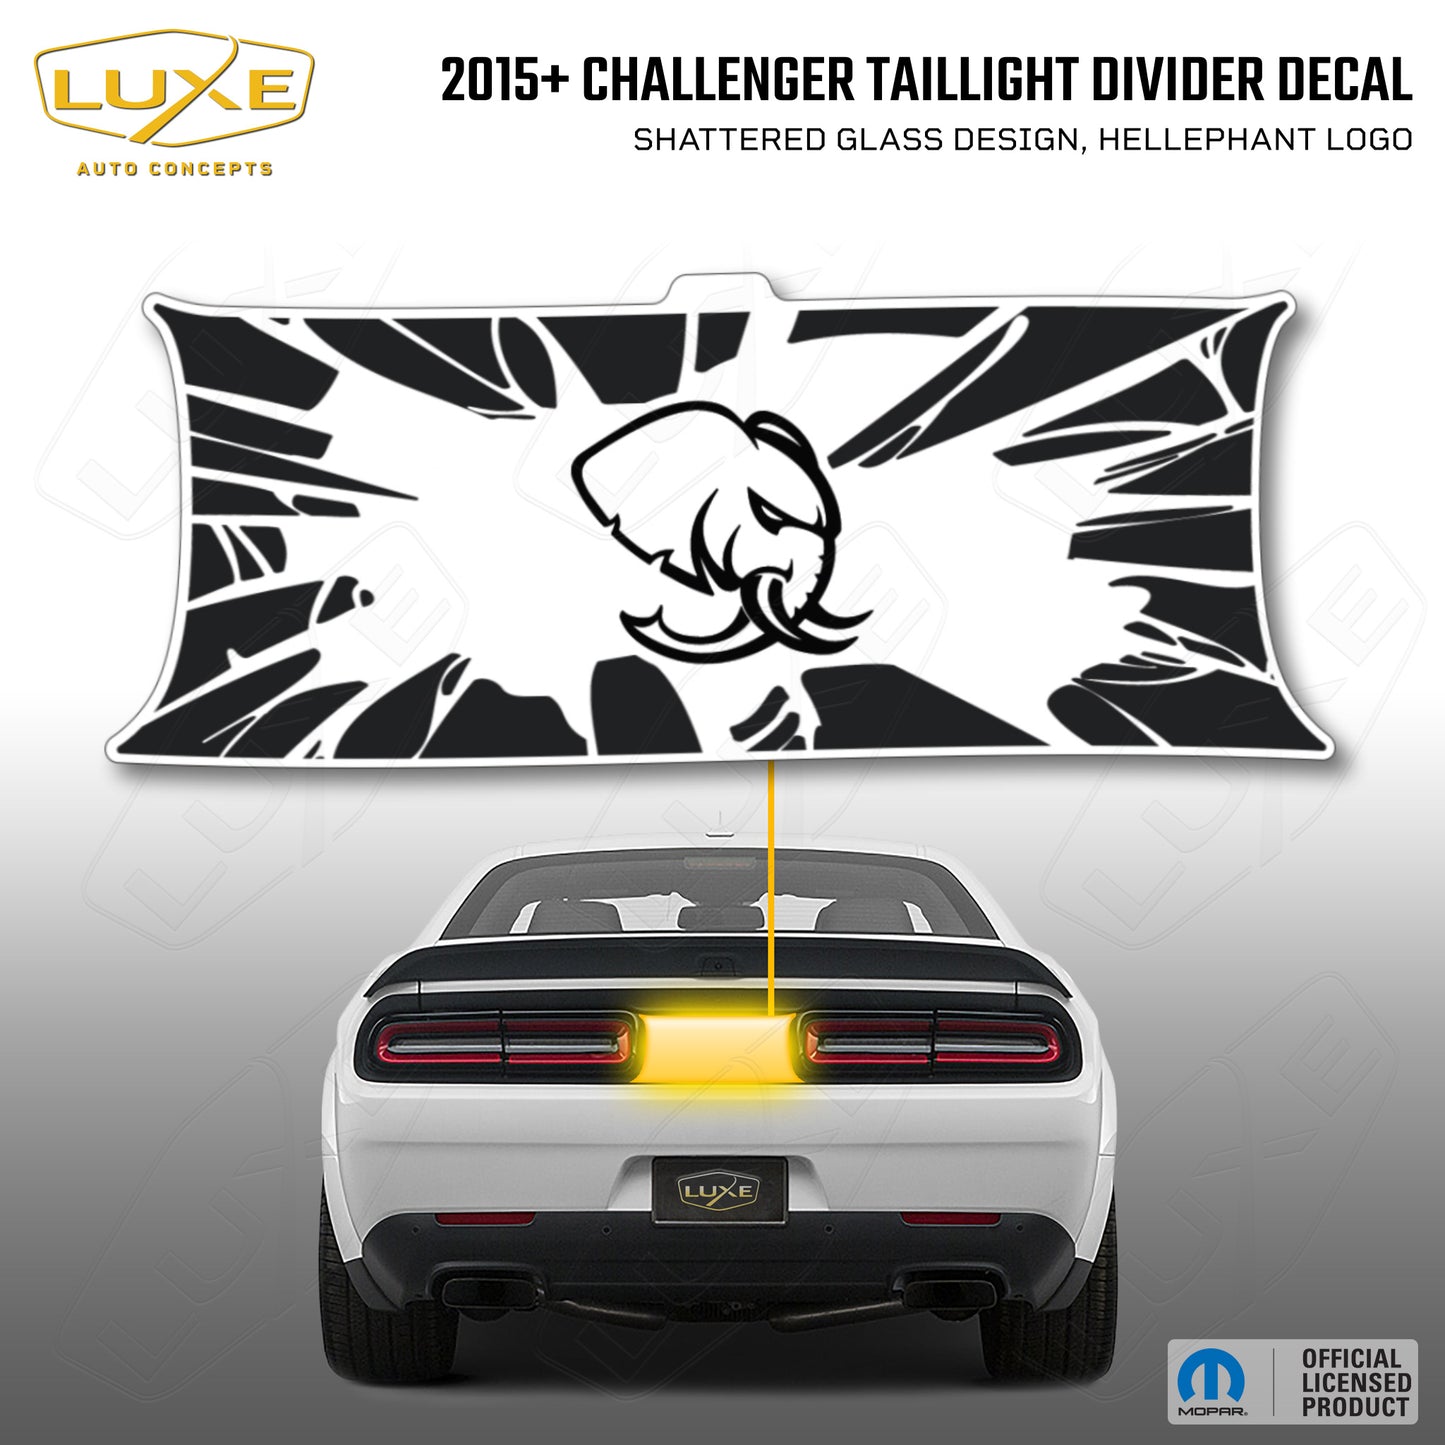 2015+ Challenger Taillight Center Divider Decal - Shattered Glass Design, Hellephant Logo